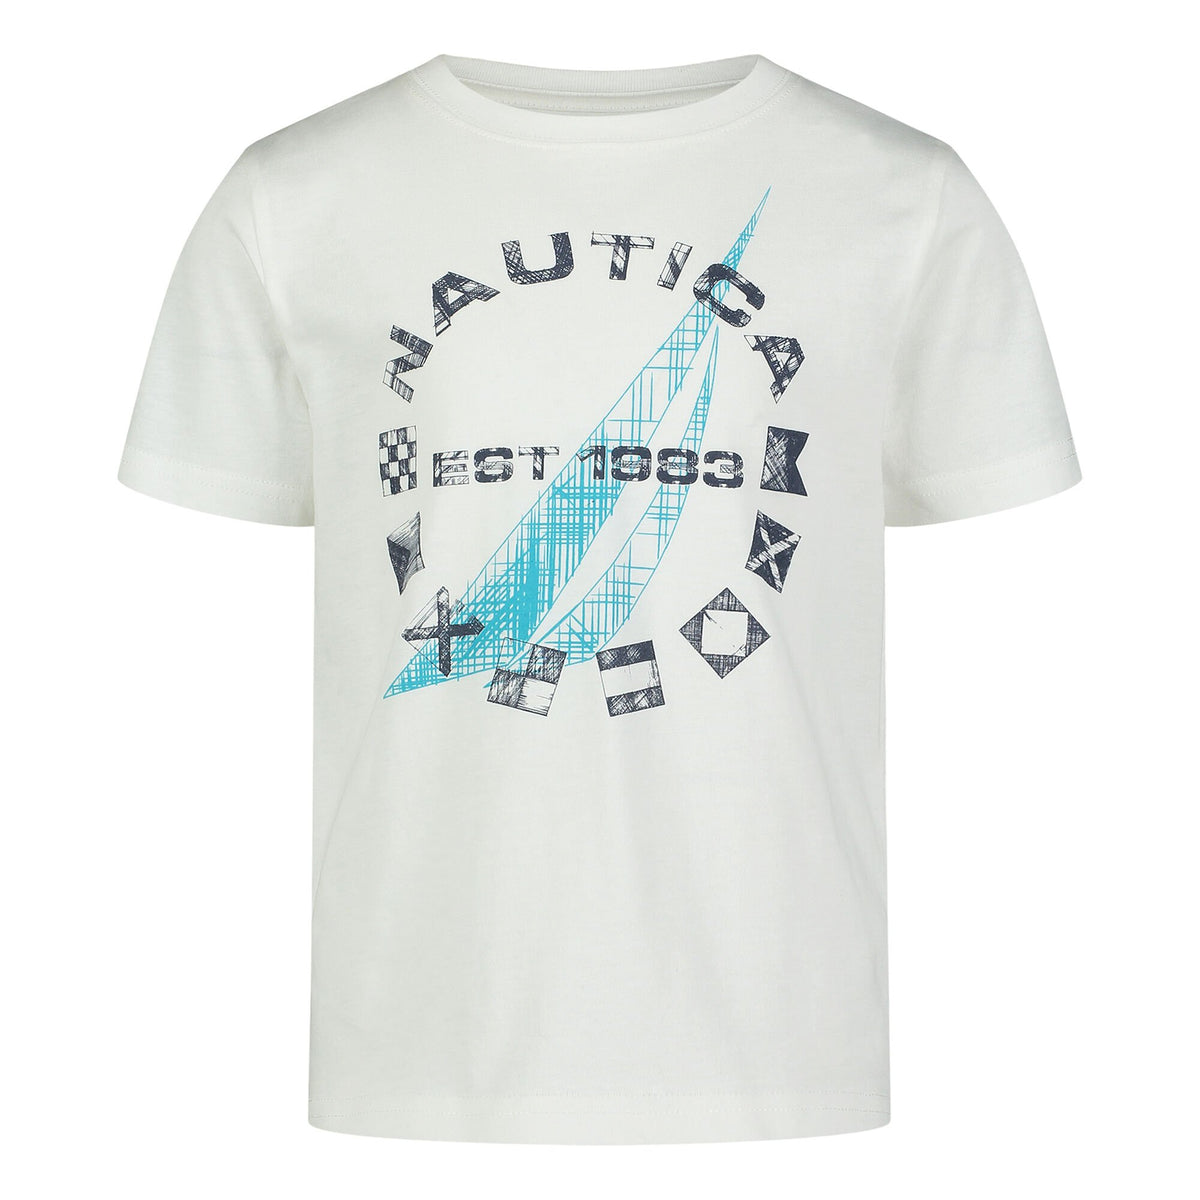 Nautica Boys' Sketch Graphic T-Shirt Antique White Wash